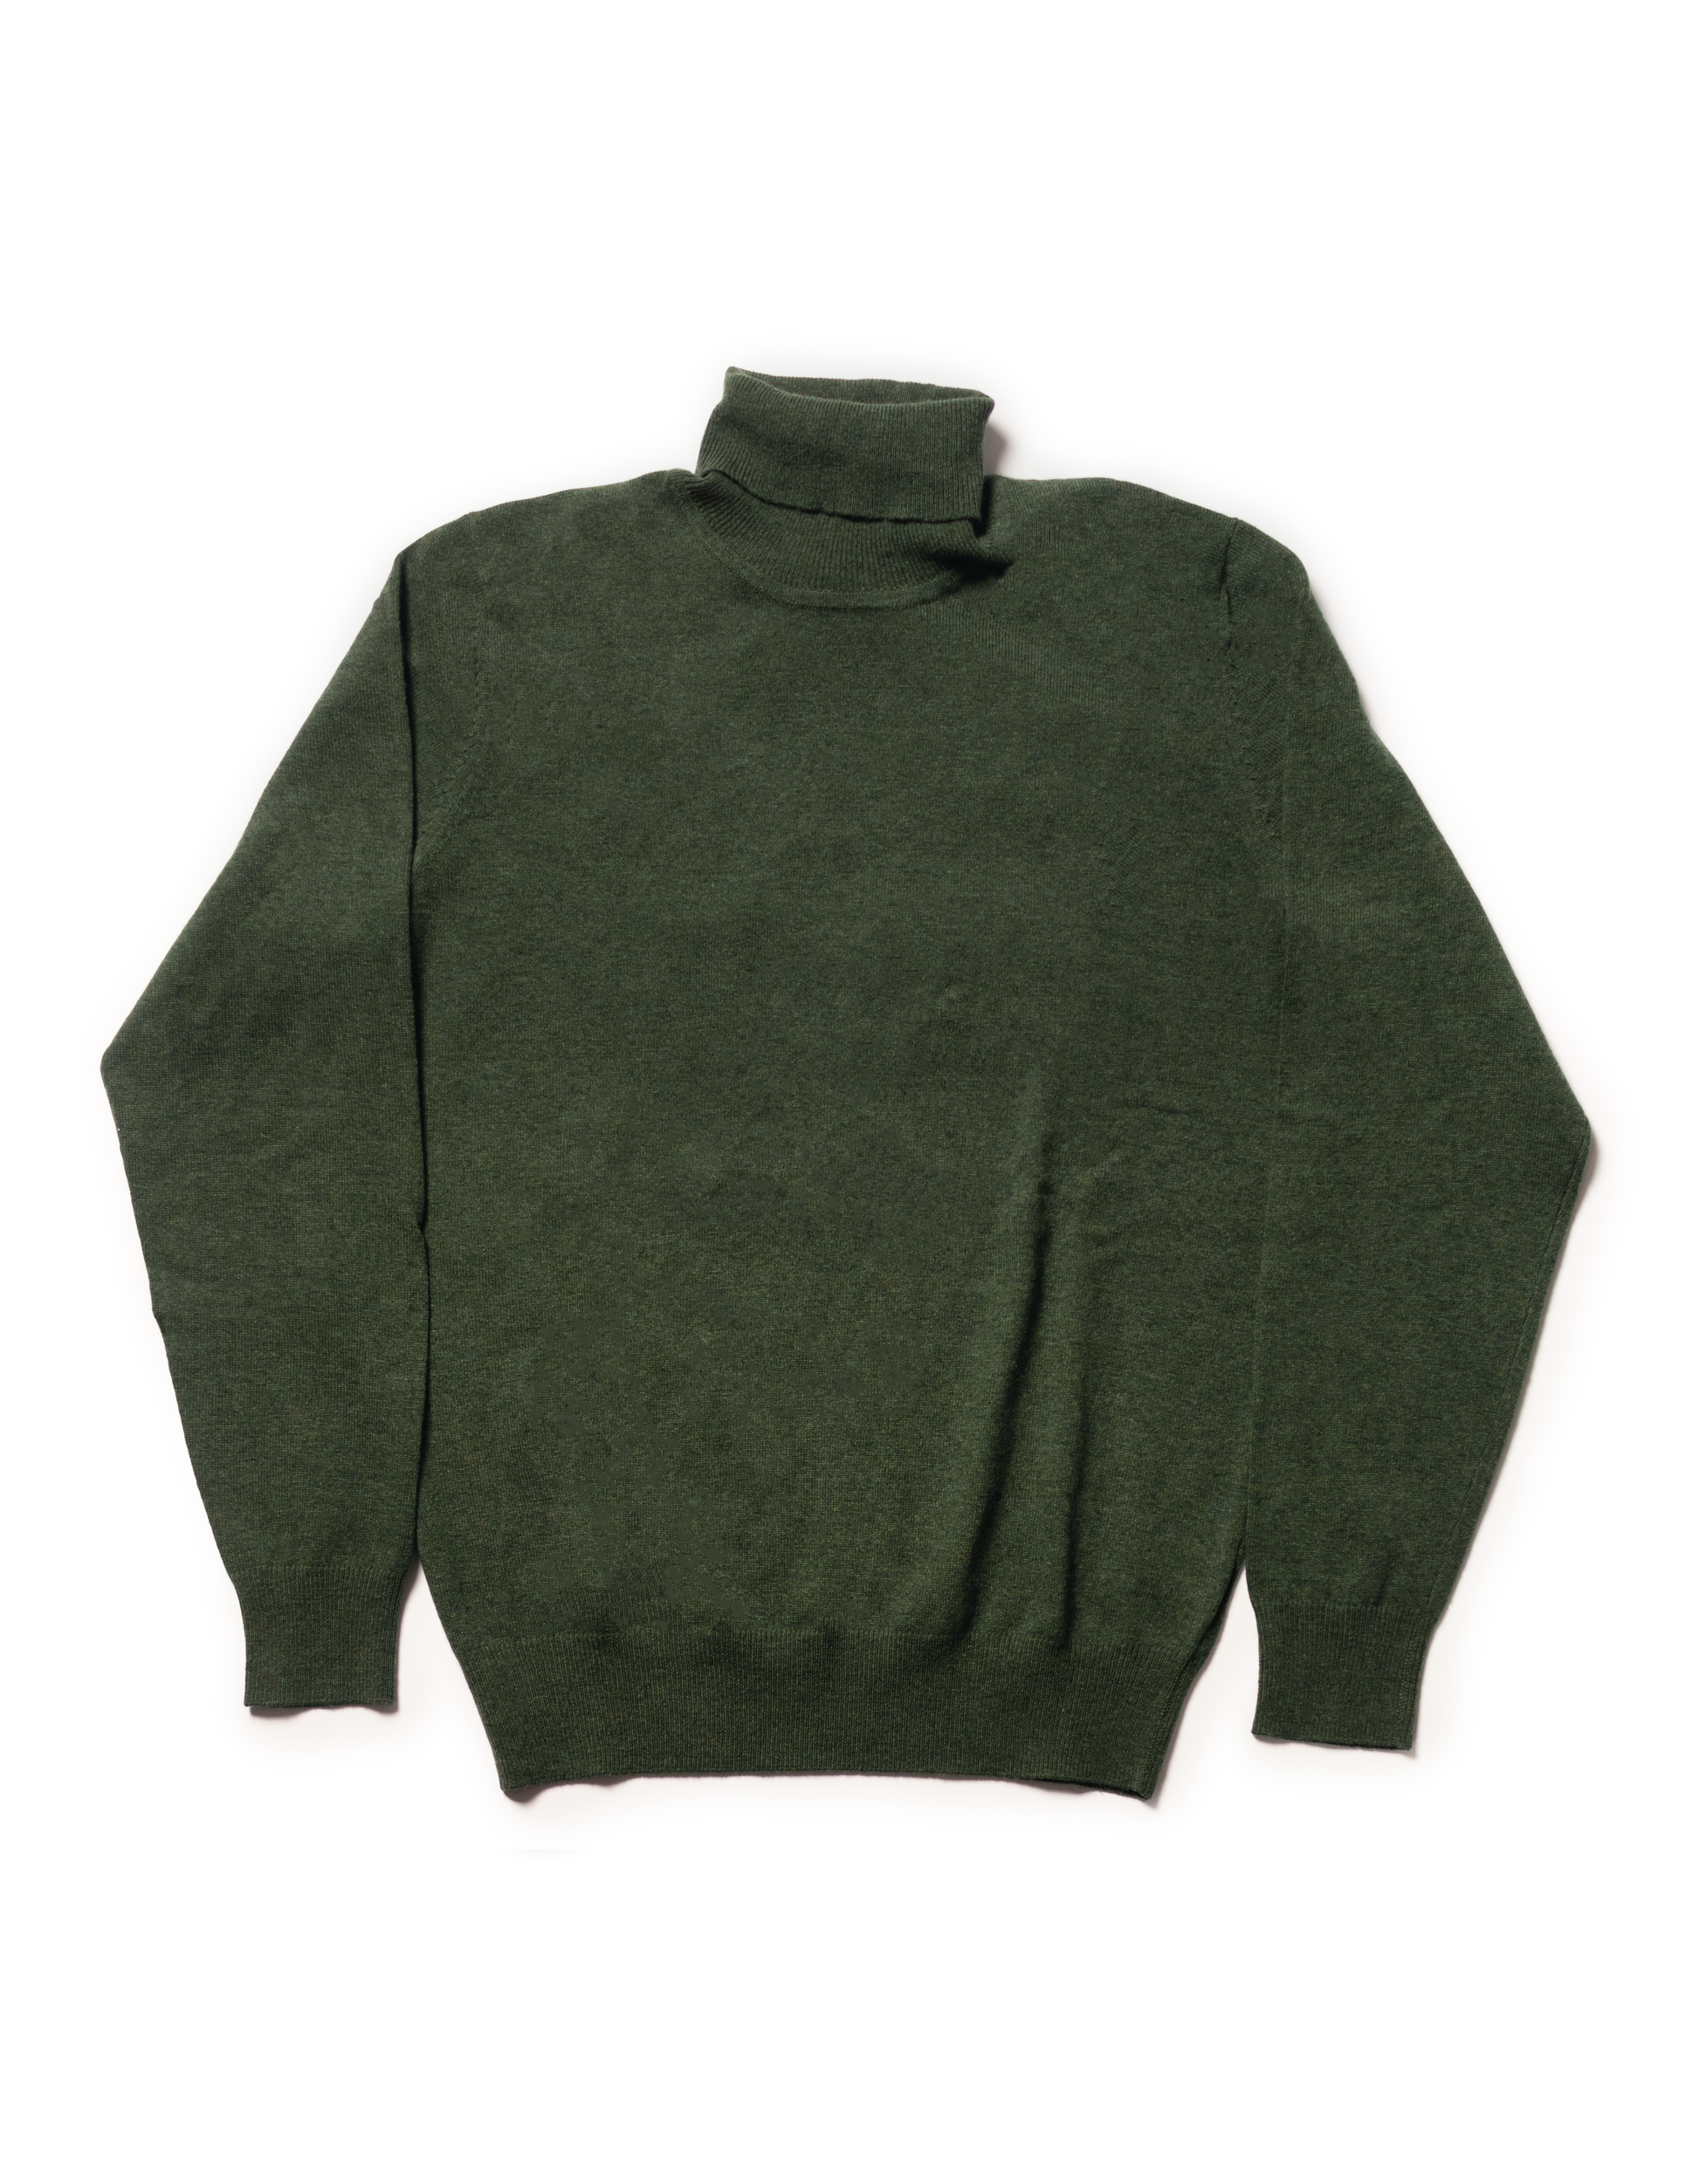 Men's Lambswool Turtleneck Sweater - Green | Men's Sweaters - J. Press